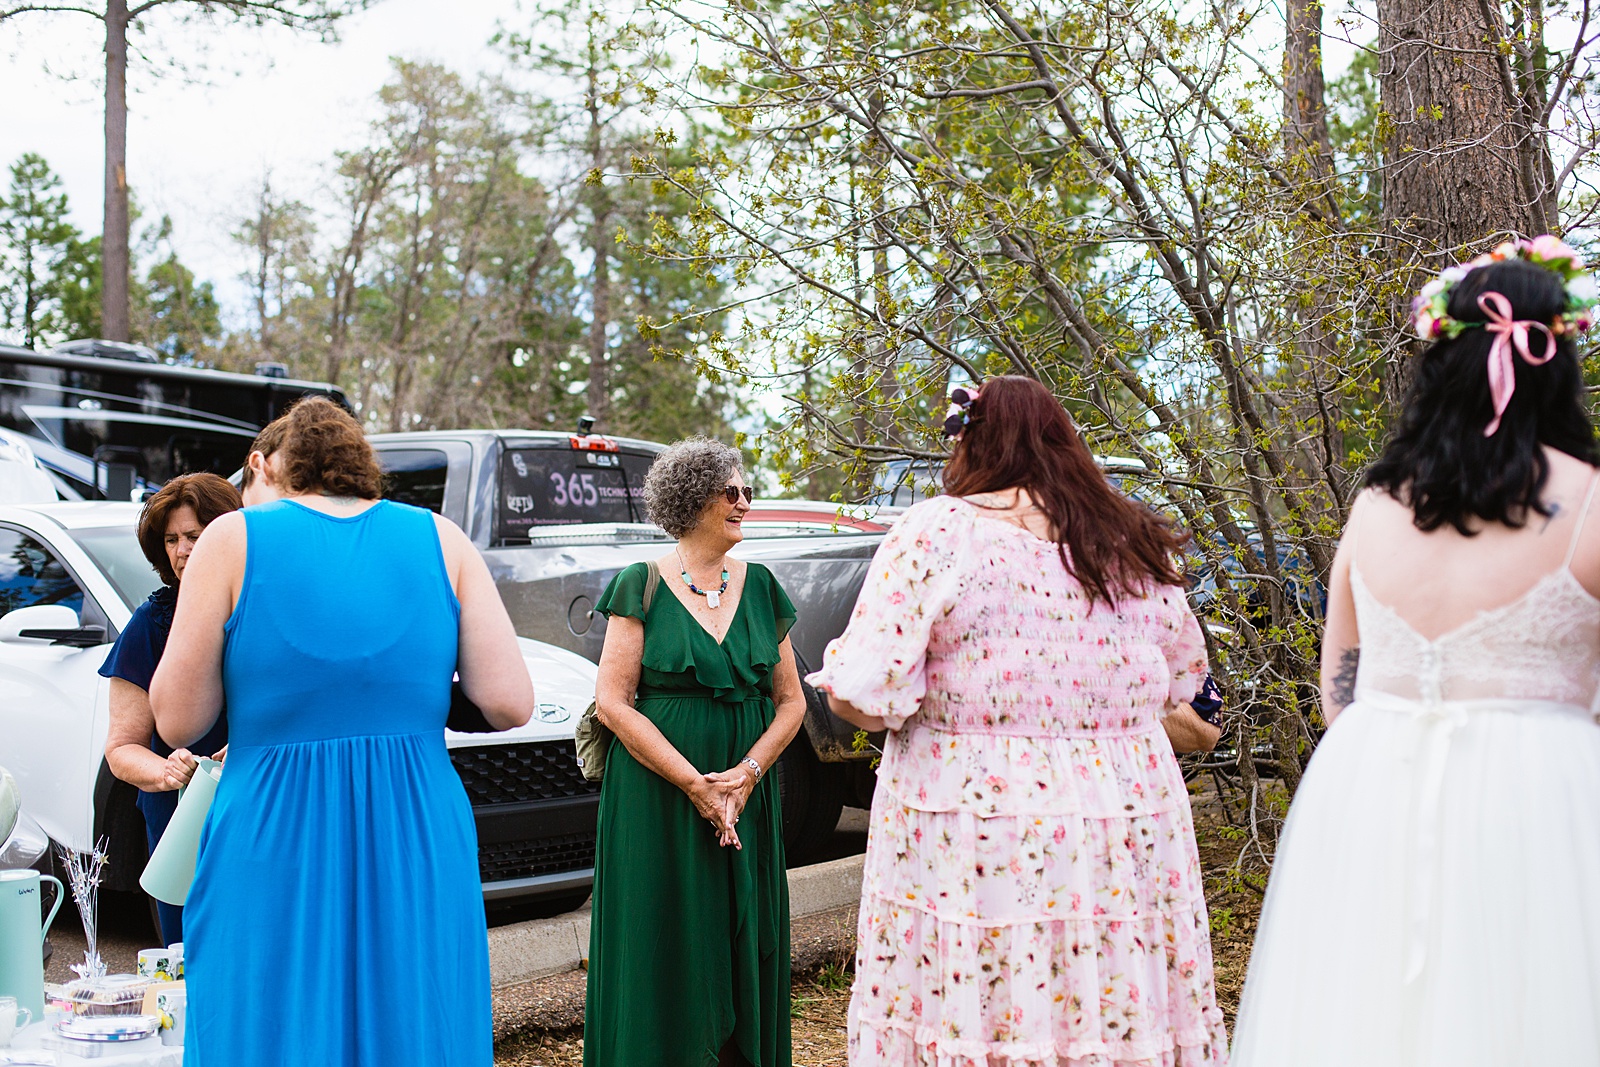 Family at Mogollon Rim wedding ceremony by Arizona elopement photographer PMA Photography.